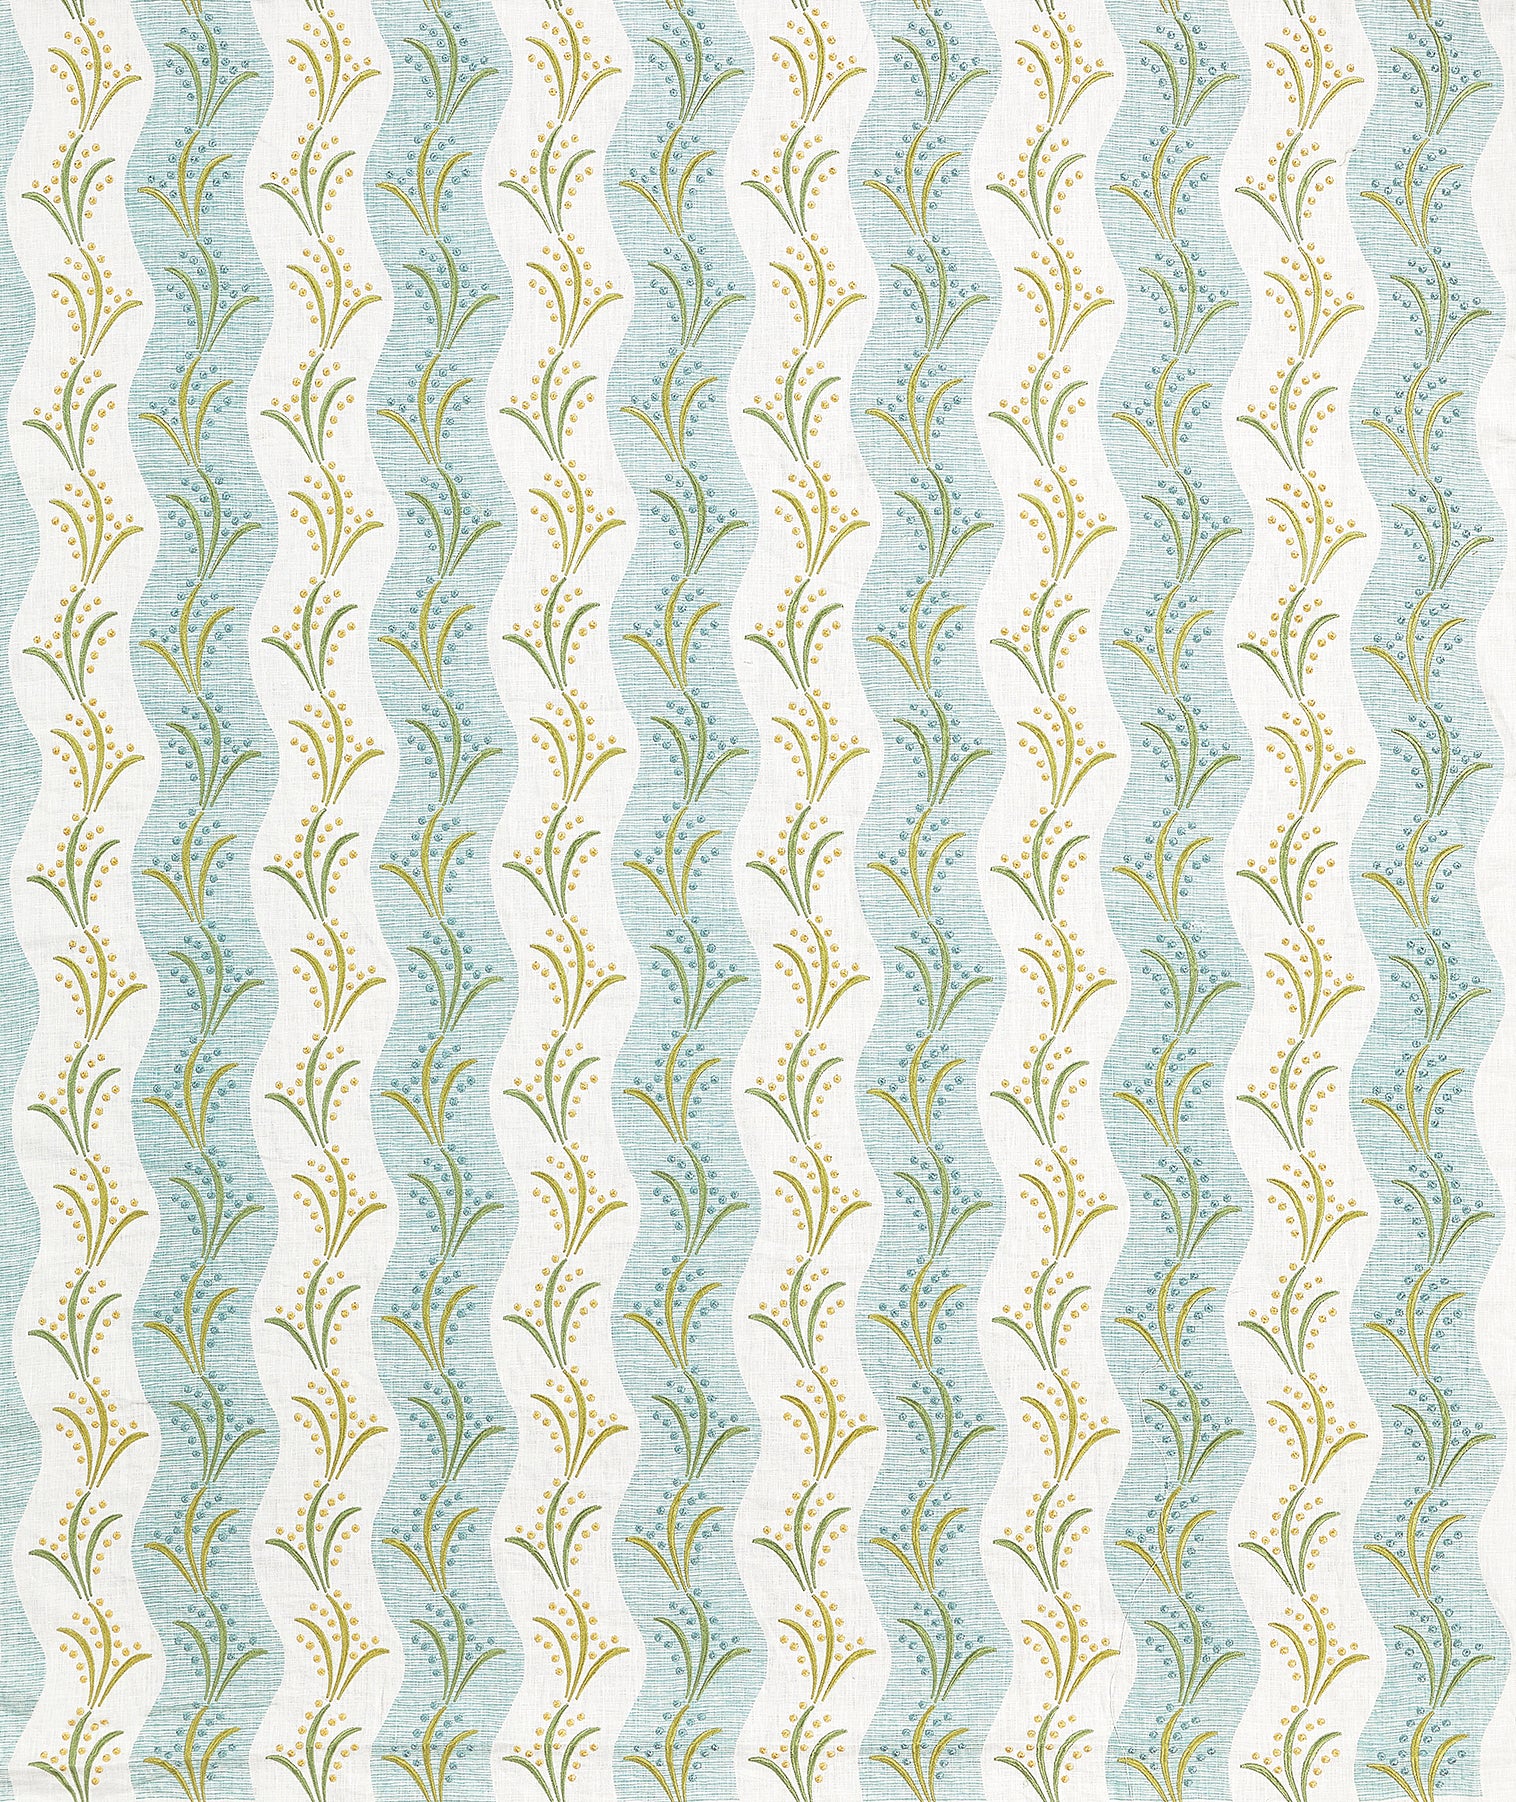 Nina Campbell Fabric - Dallimore Sidney Stripe Aqua/Green/Yellow NCF4532-05